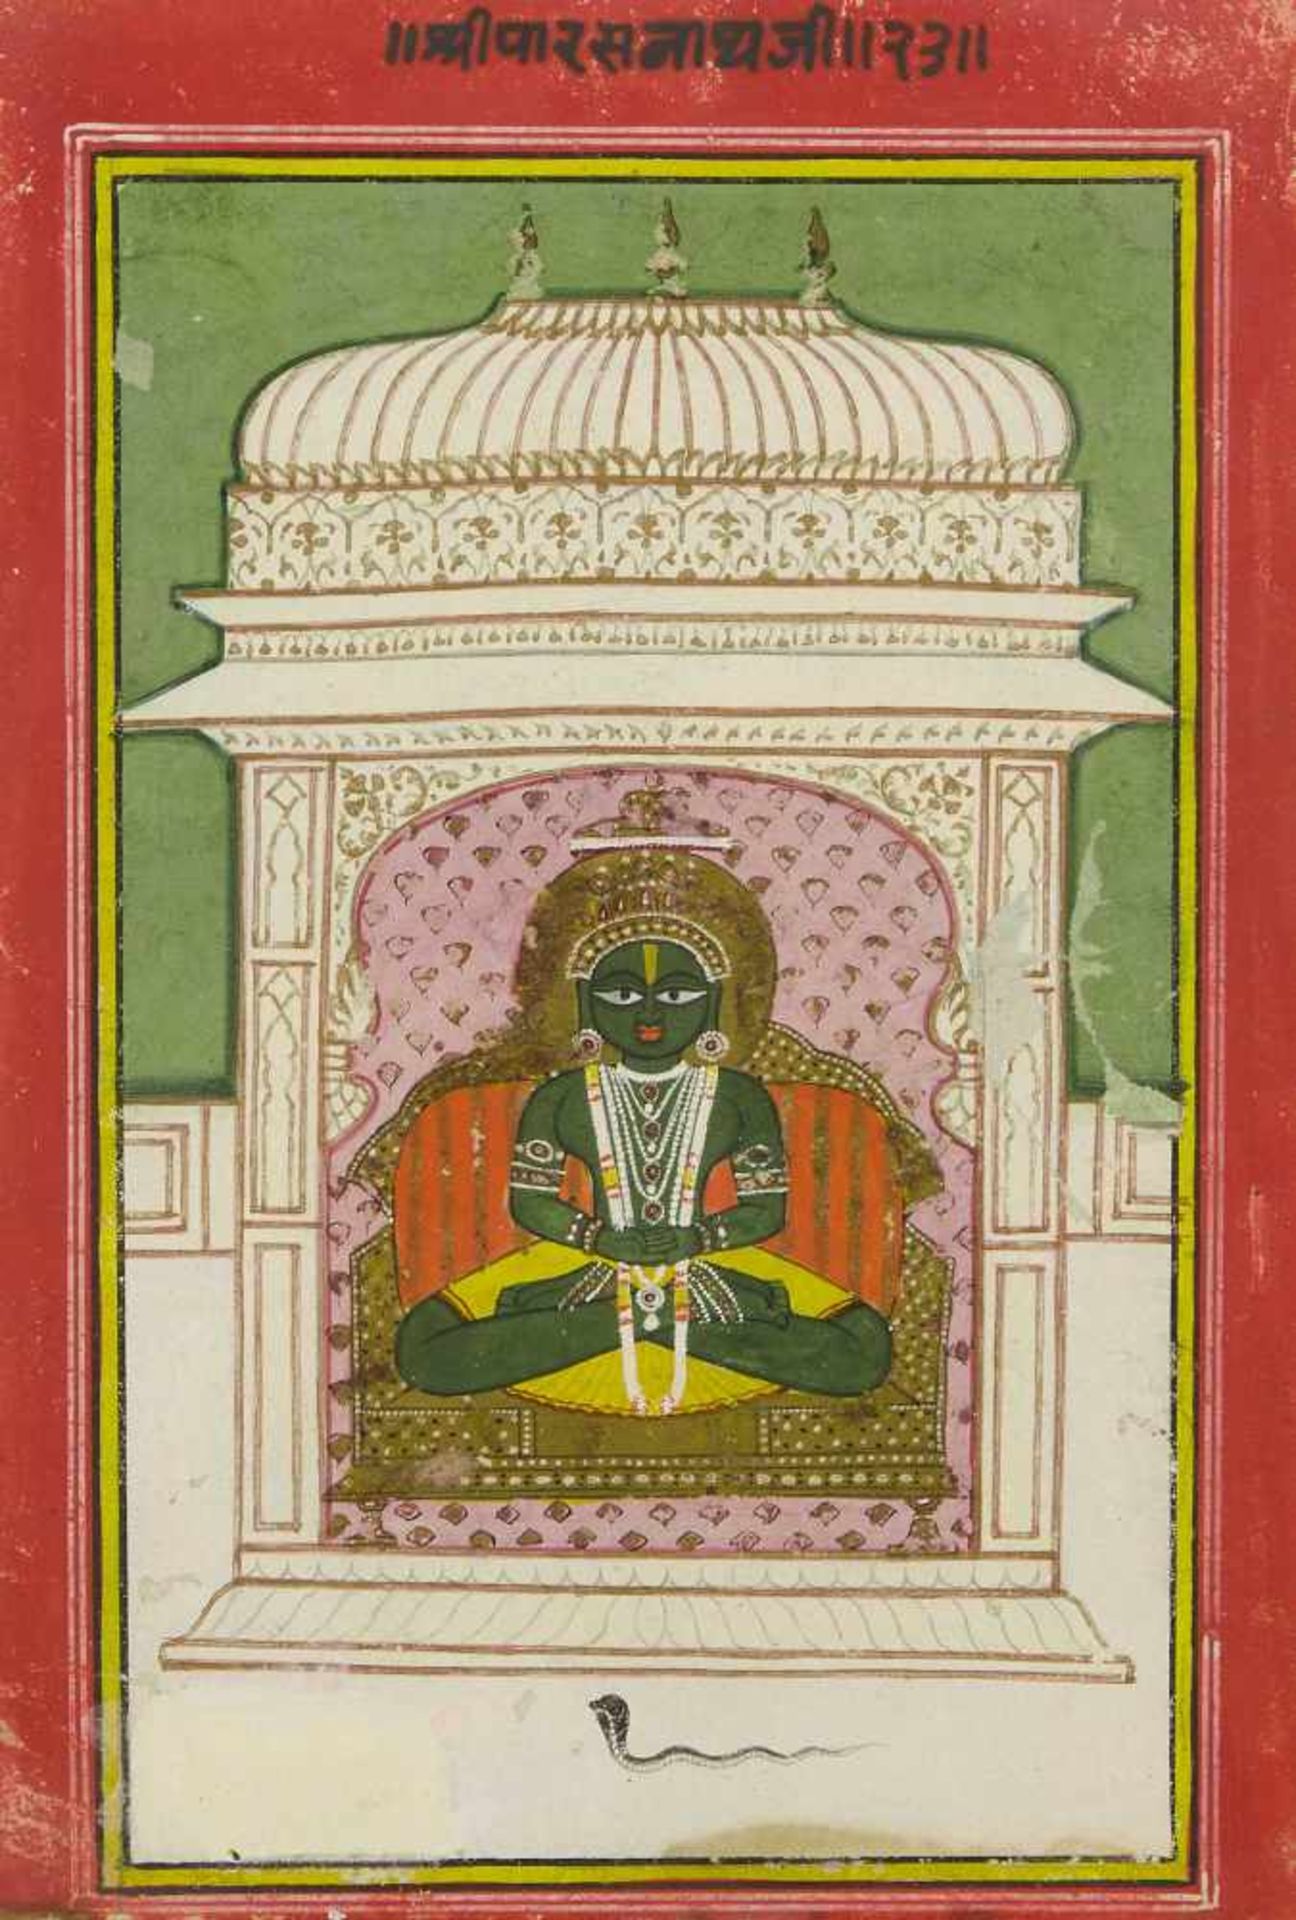 Lot: 7 Jain-MiniaturmalereienIndien. Gouache und Gold auf Papier. Sieben Miniaturmalereien mit der - Bild 2 aus 14